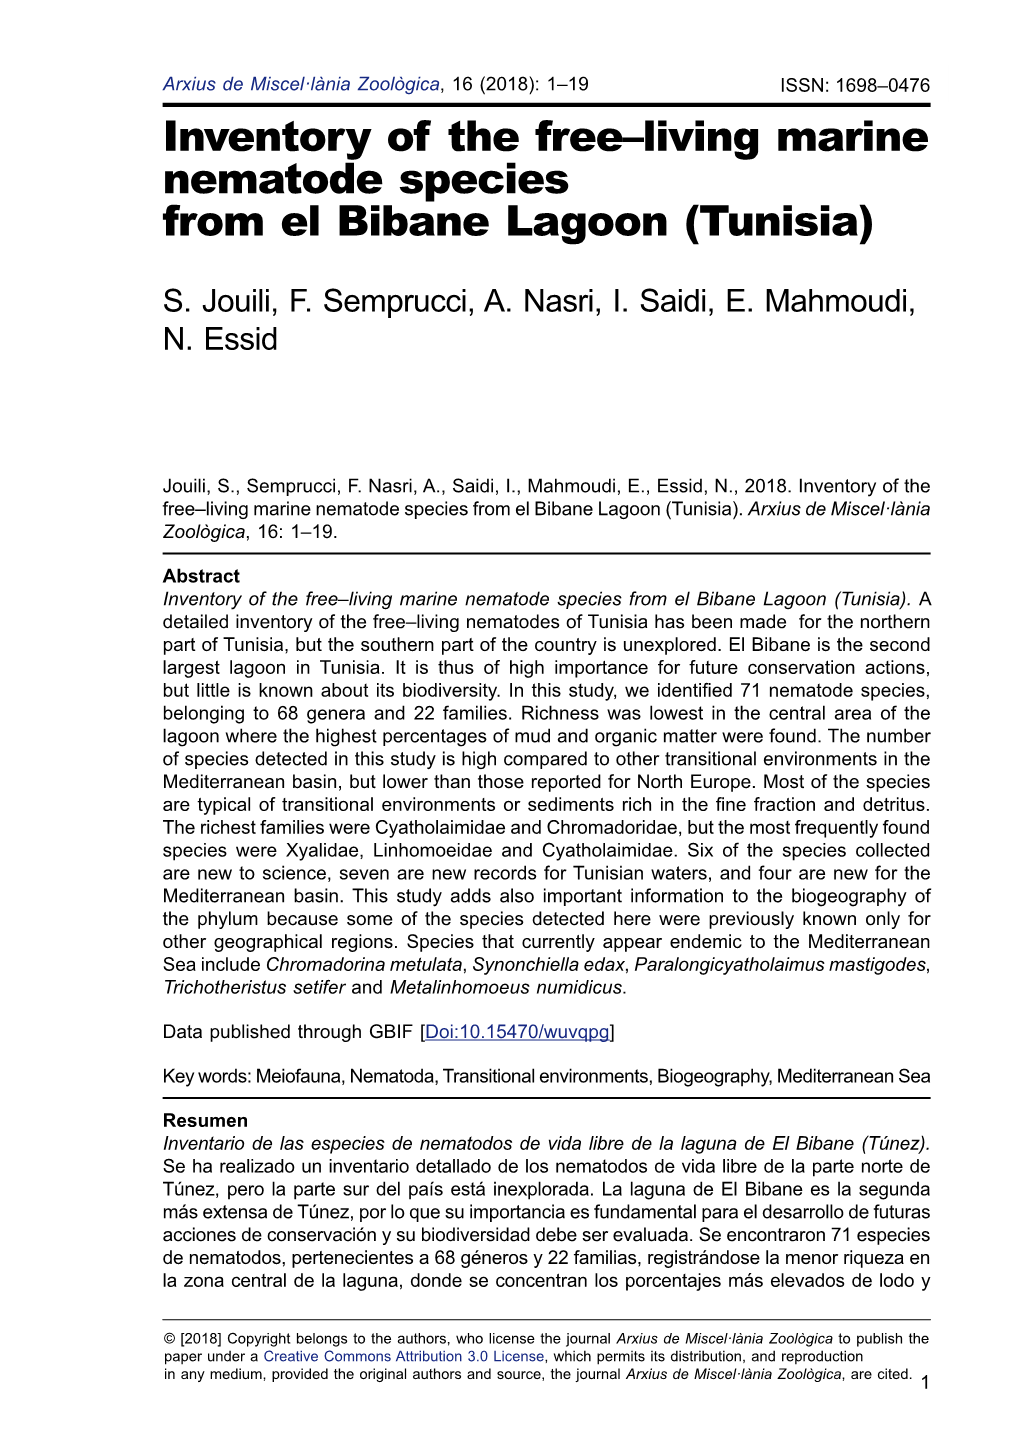 Inventory of the Free–Living Marine Nematode Species from El Bibane Lagoon (Tunisia)